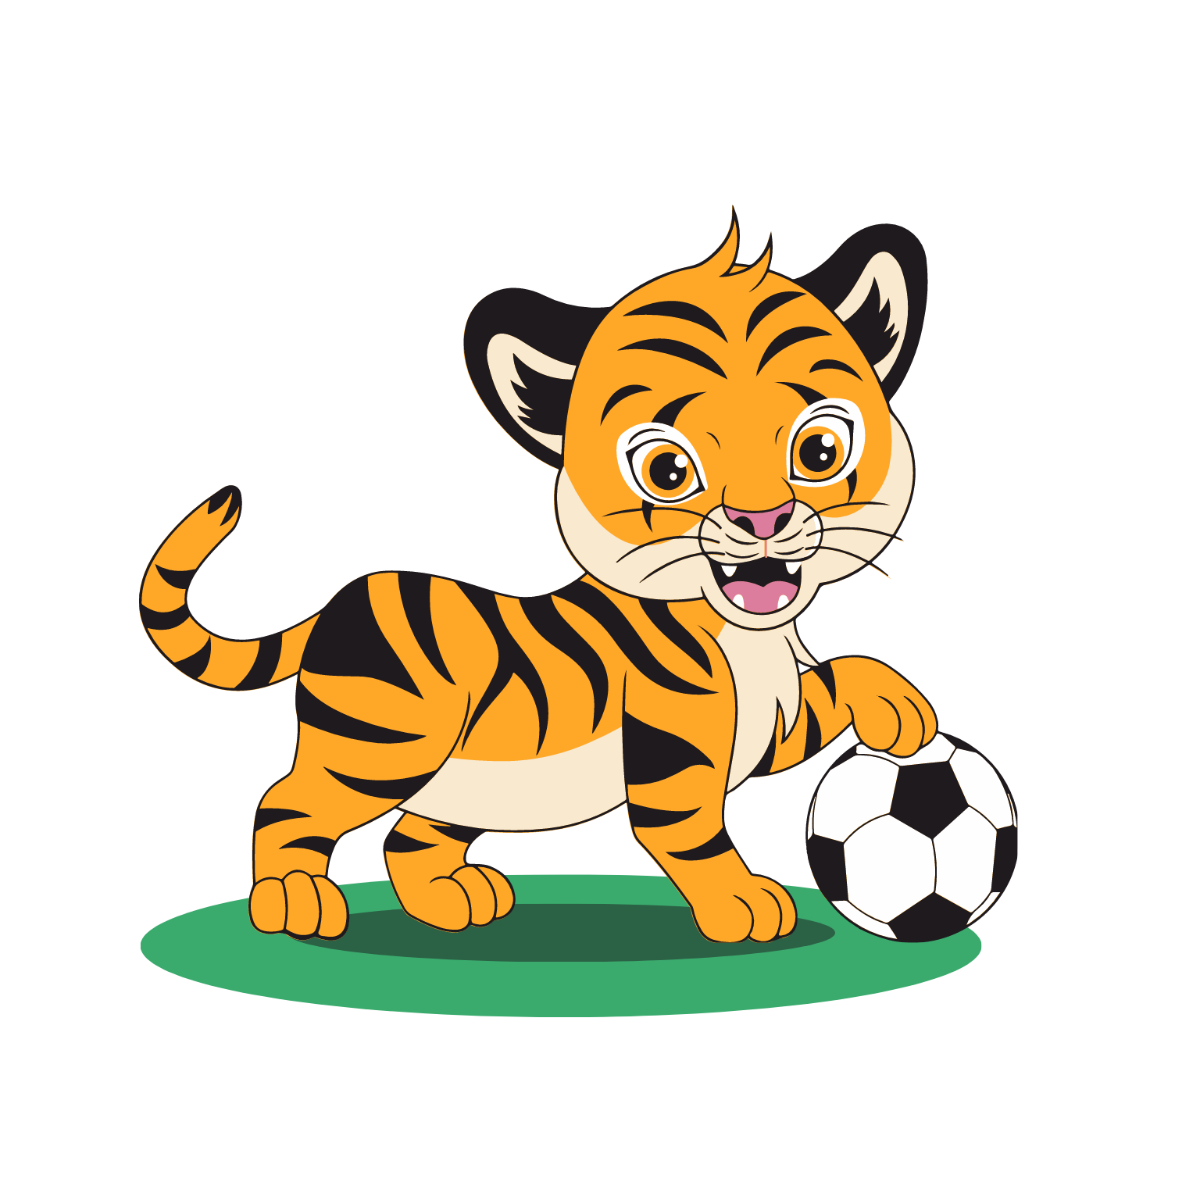 FREE Tiger Vector - Image Download in PDF, Illustrator, Photoshop, EPS ...